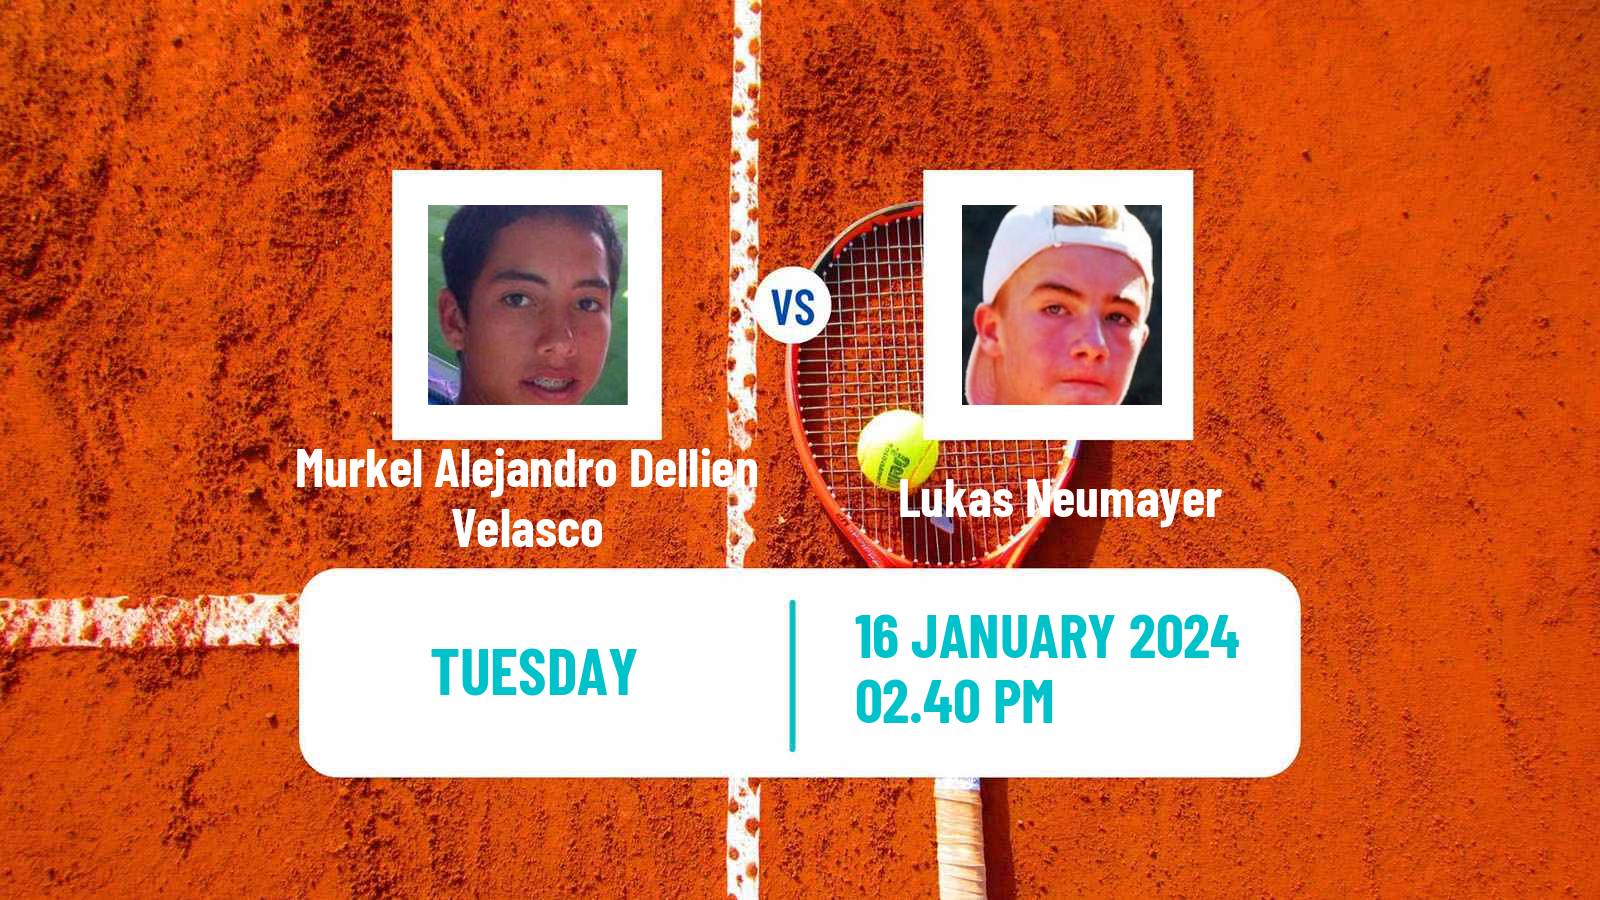 Tennis Buenos Aires 2 Challenger Men Murkel Alejandro Dellien Velasco - Lukas Neumayer